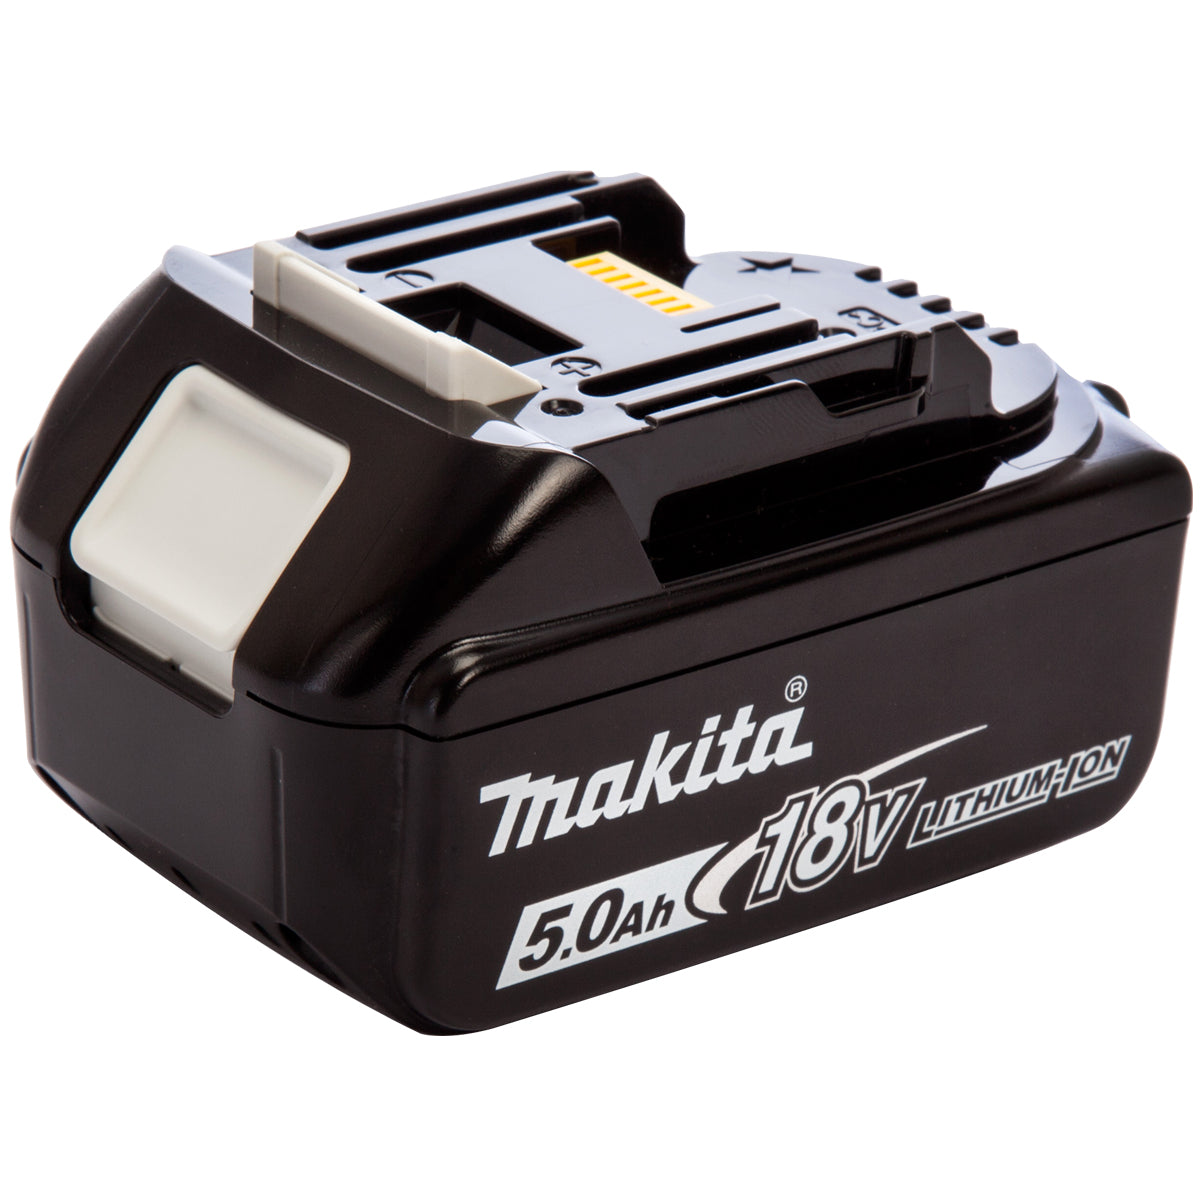 Makita 12 Piece Kit 18V Li-ion With 4 x 5.0Ah Batteries Charger T4TKIT-12